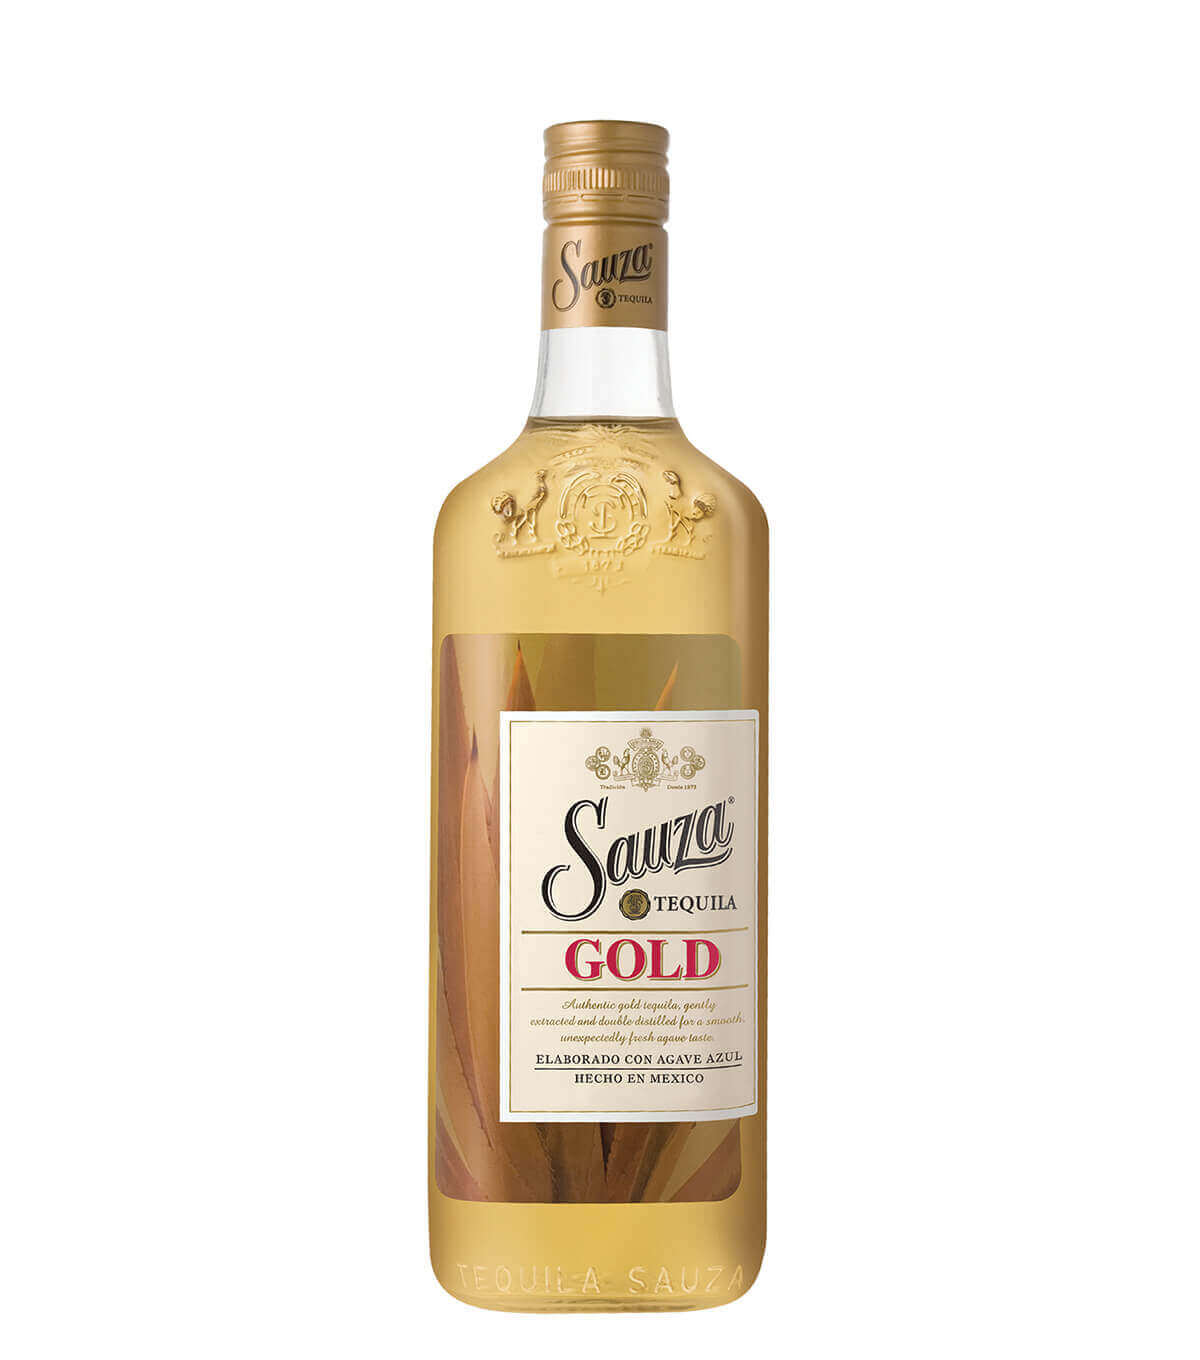 Сауза голд. Текила Sauza 0,5 38% Gold. Виски Sauza. Sauza Gold, Silver 1l.